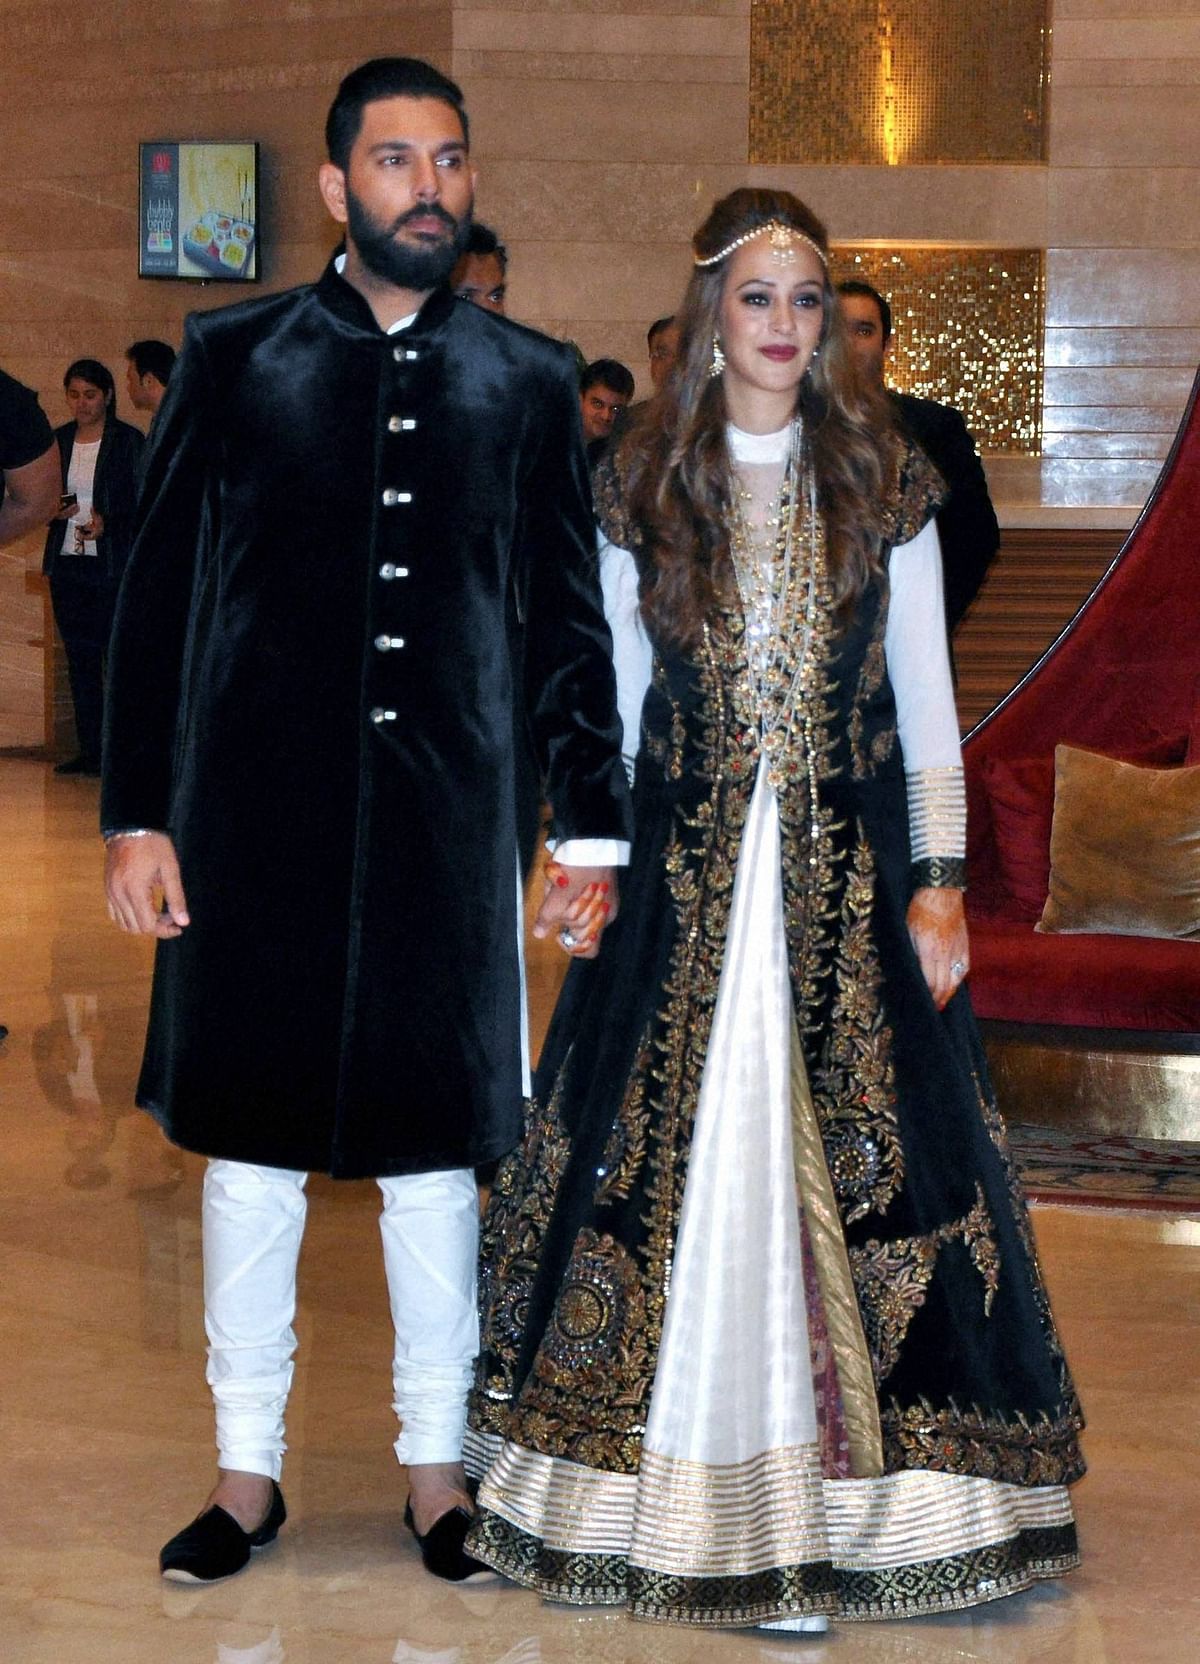 Team India adds glamour to Yuvraj Singh-Hazel Keech’s pre-wedding bash.